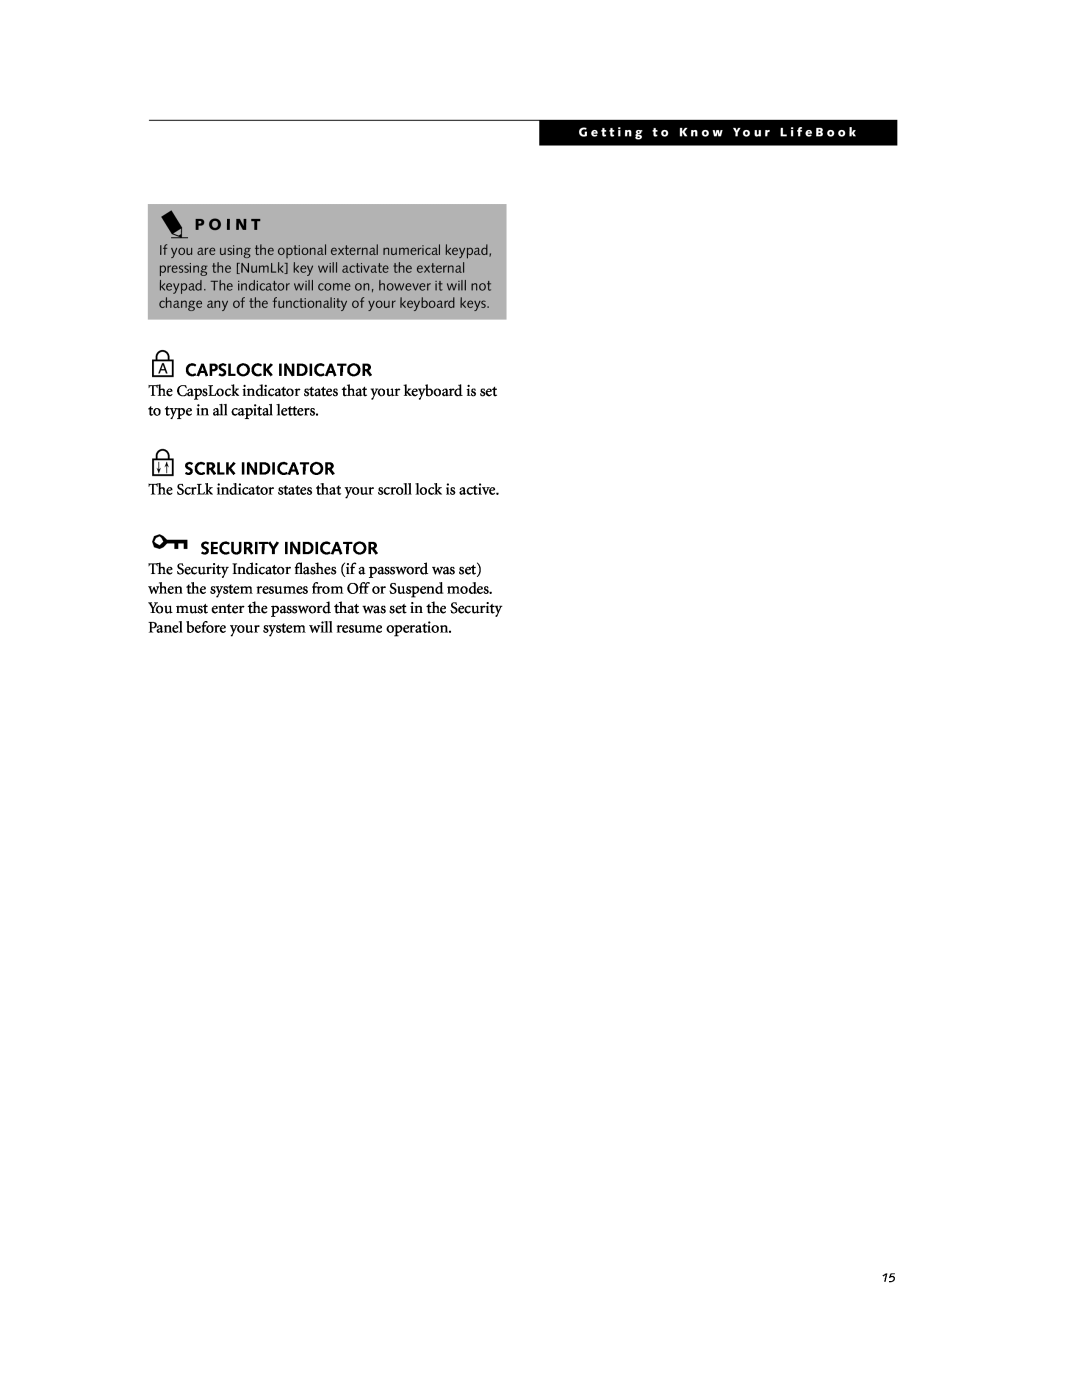 Fujitsu DVD Player manual Capslock Indicator, Scrlk Indicator, Security Indicator, P O I N T 